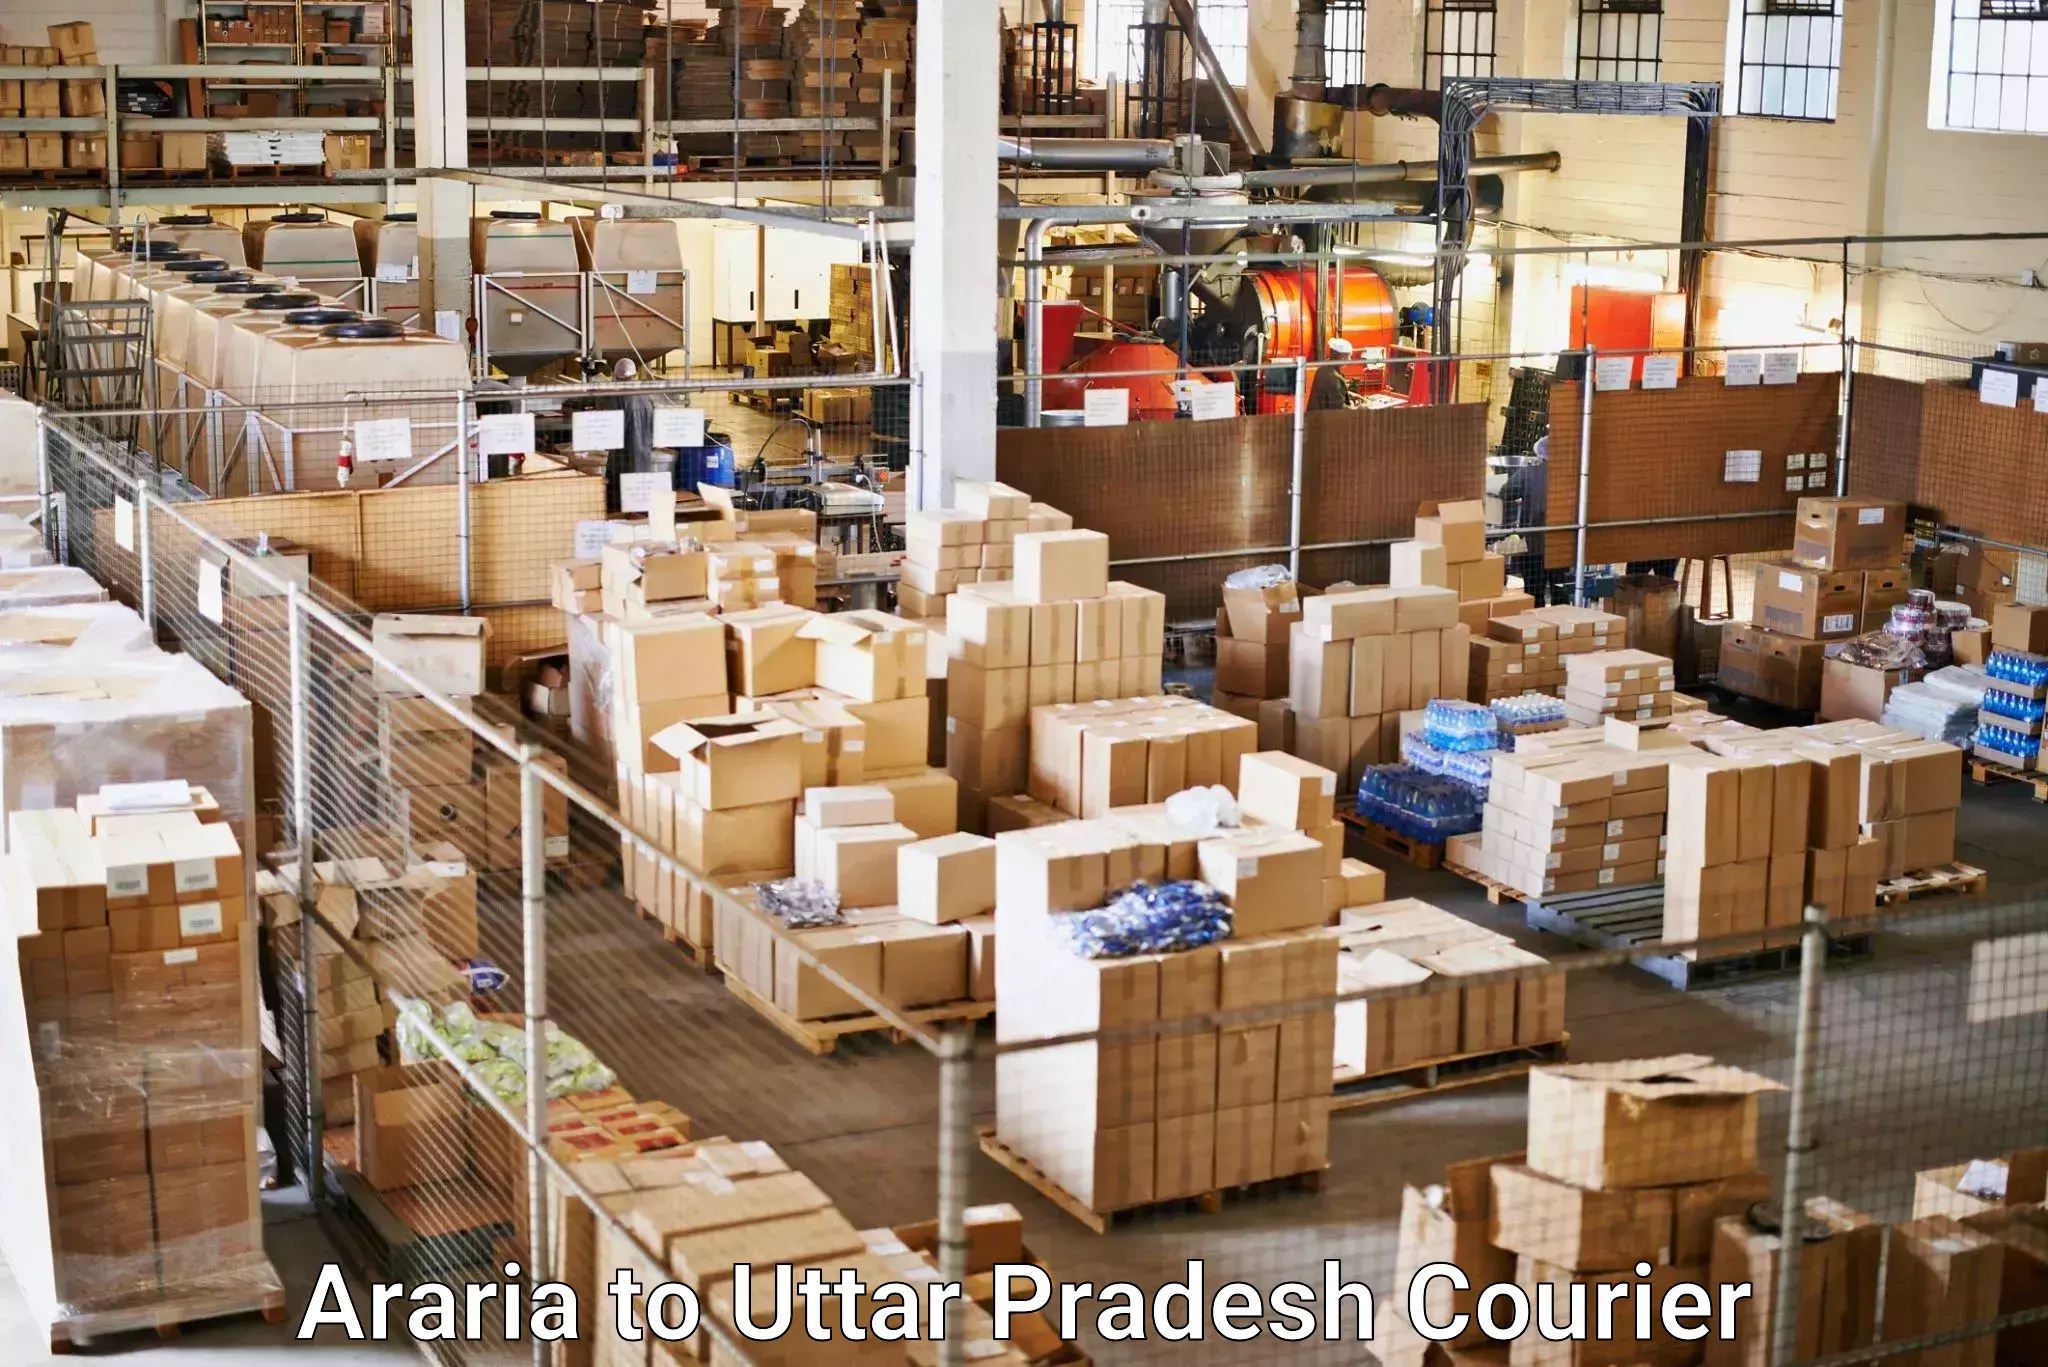 High-speed parcel service Araria to Varanasi